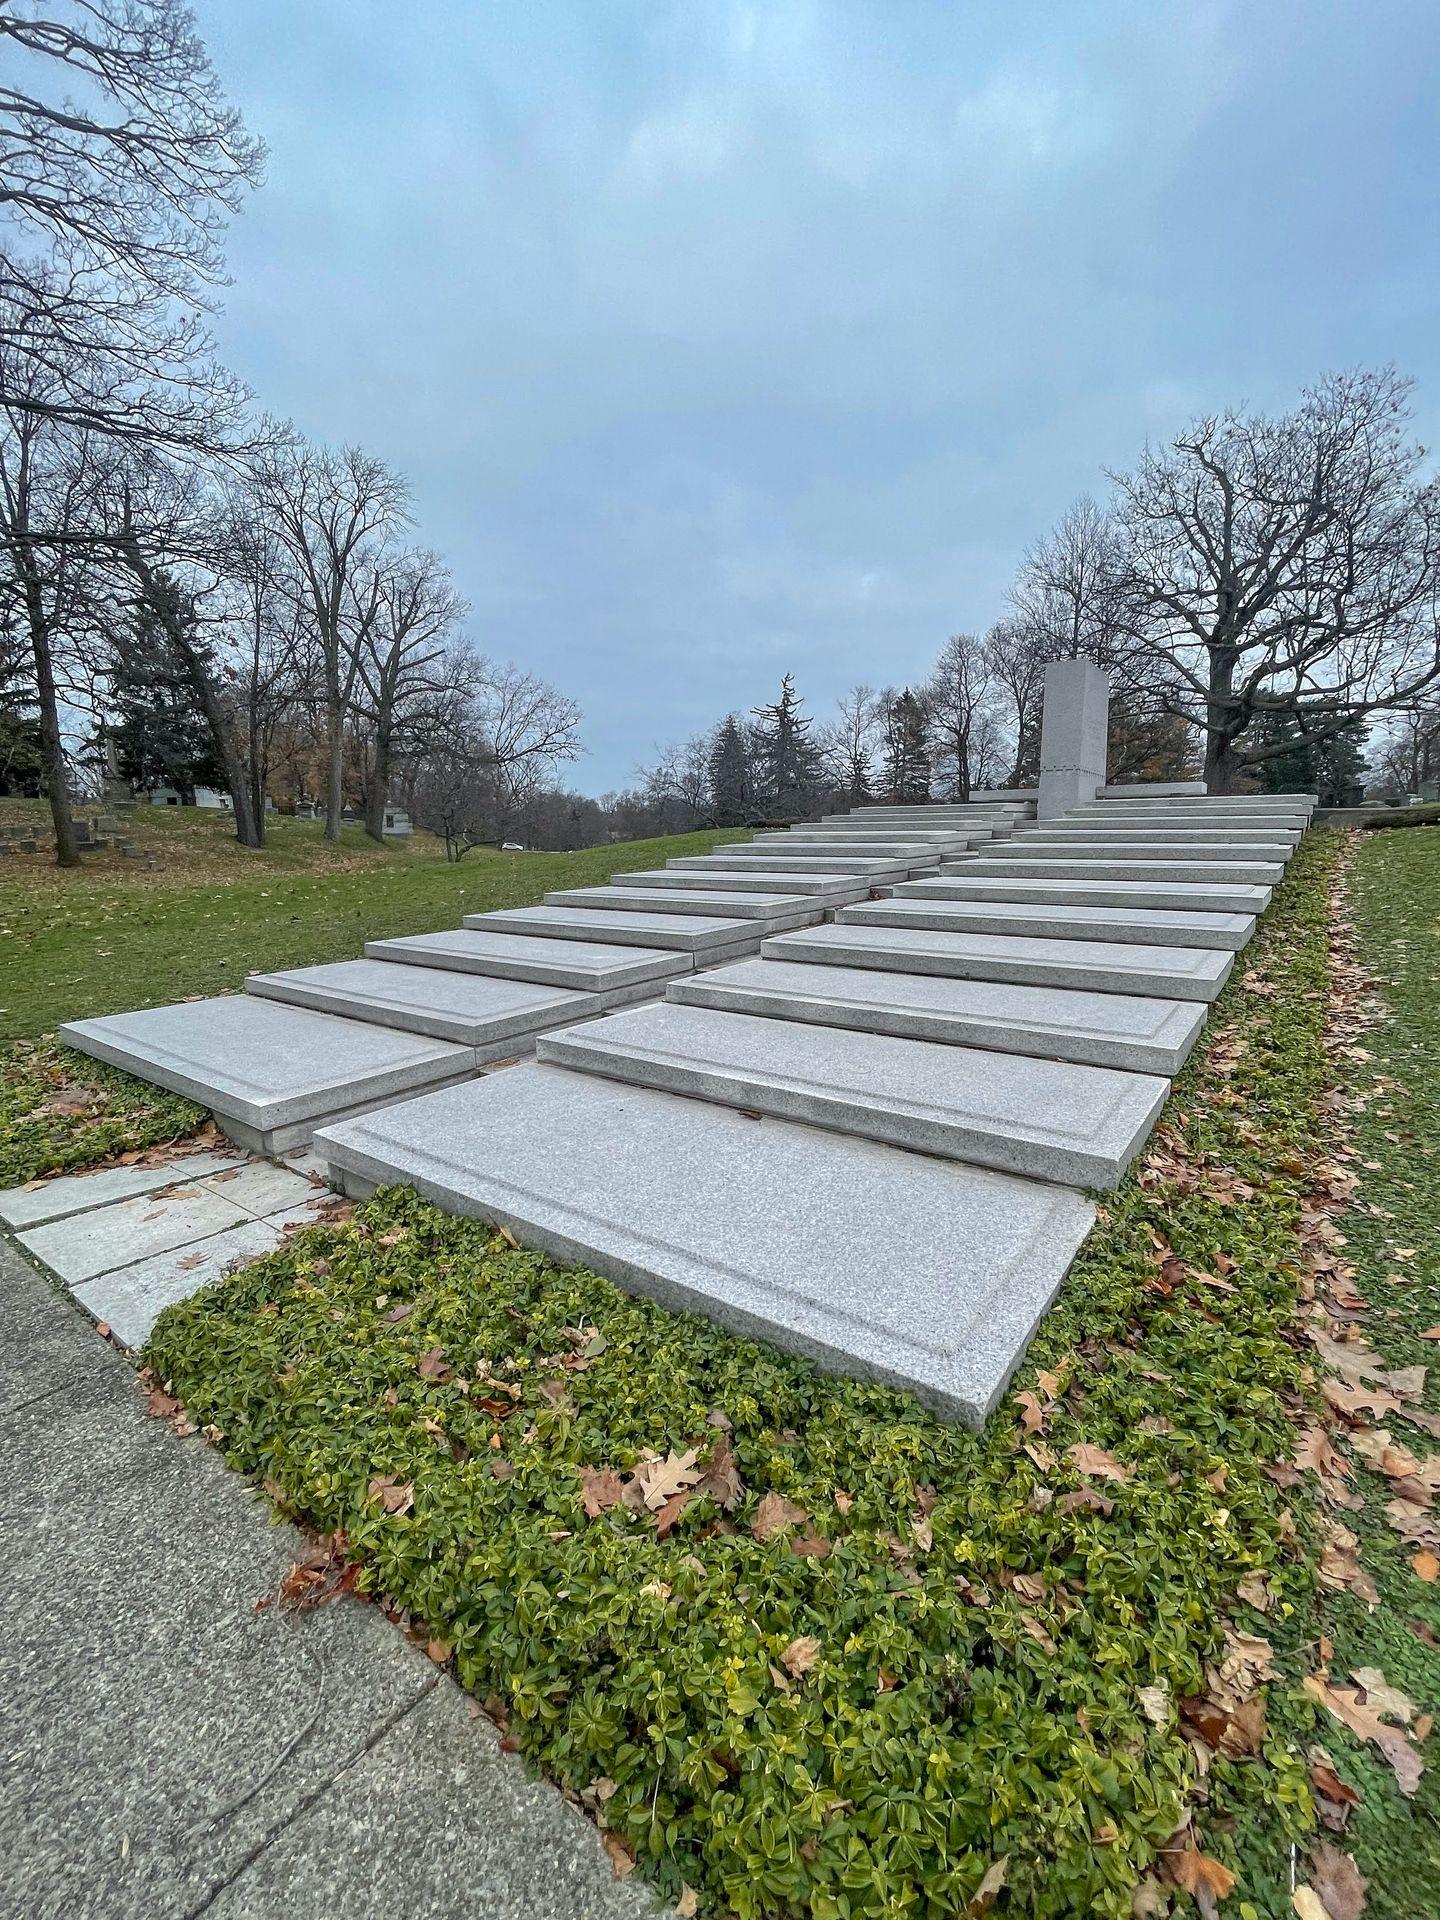 An open air mausoleum designed by Frank Lloyd Wright. The mausoleum looks a bit like steps.